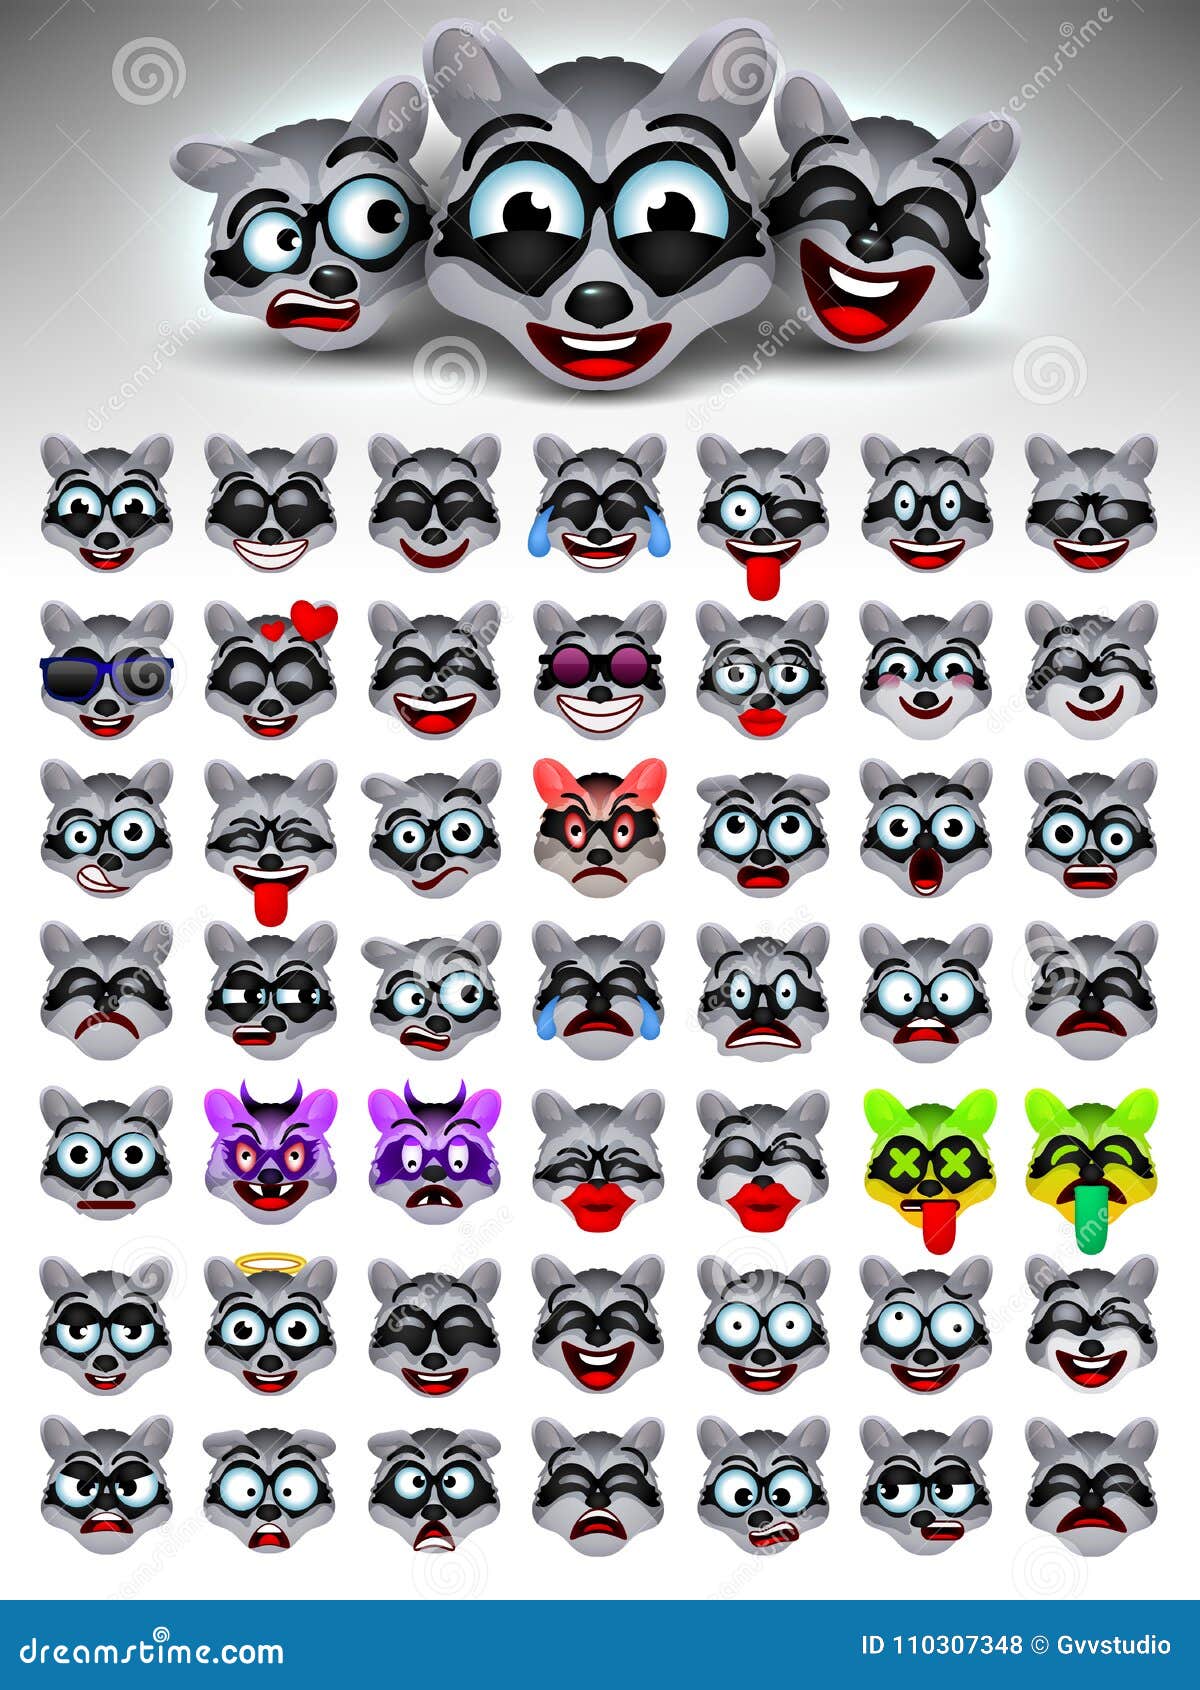 Raccoon Face Emotions. Facial Expression. Vector Illustration. Funny Crazy Raccoons  Cartoon  Set. Stock Vector - Illustration of emotional,  morning: 110307348